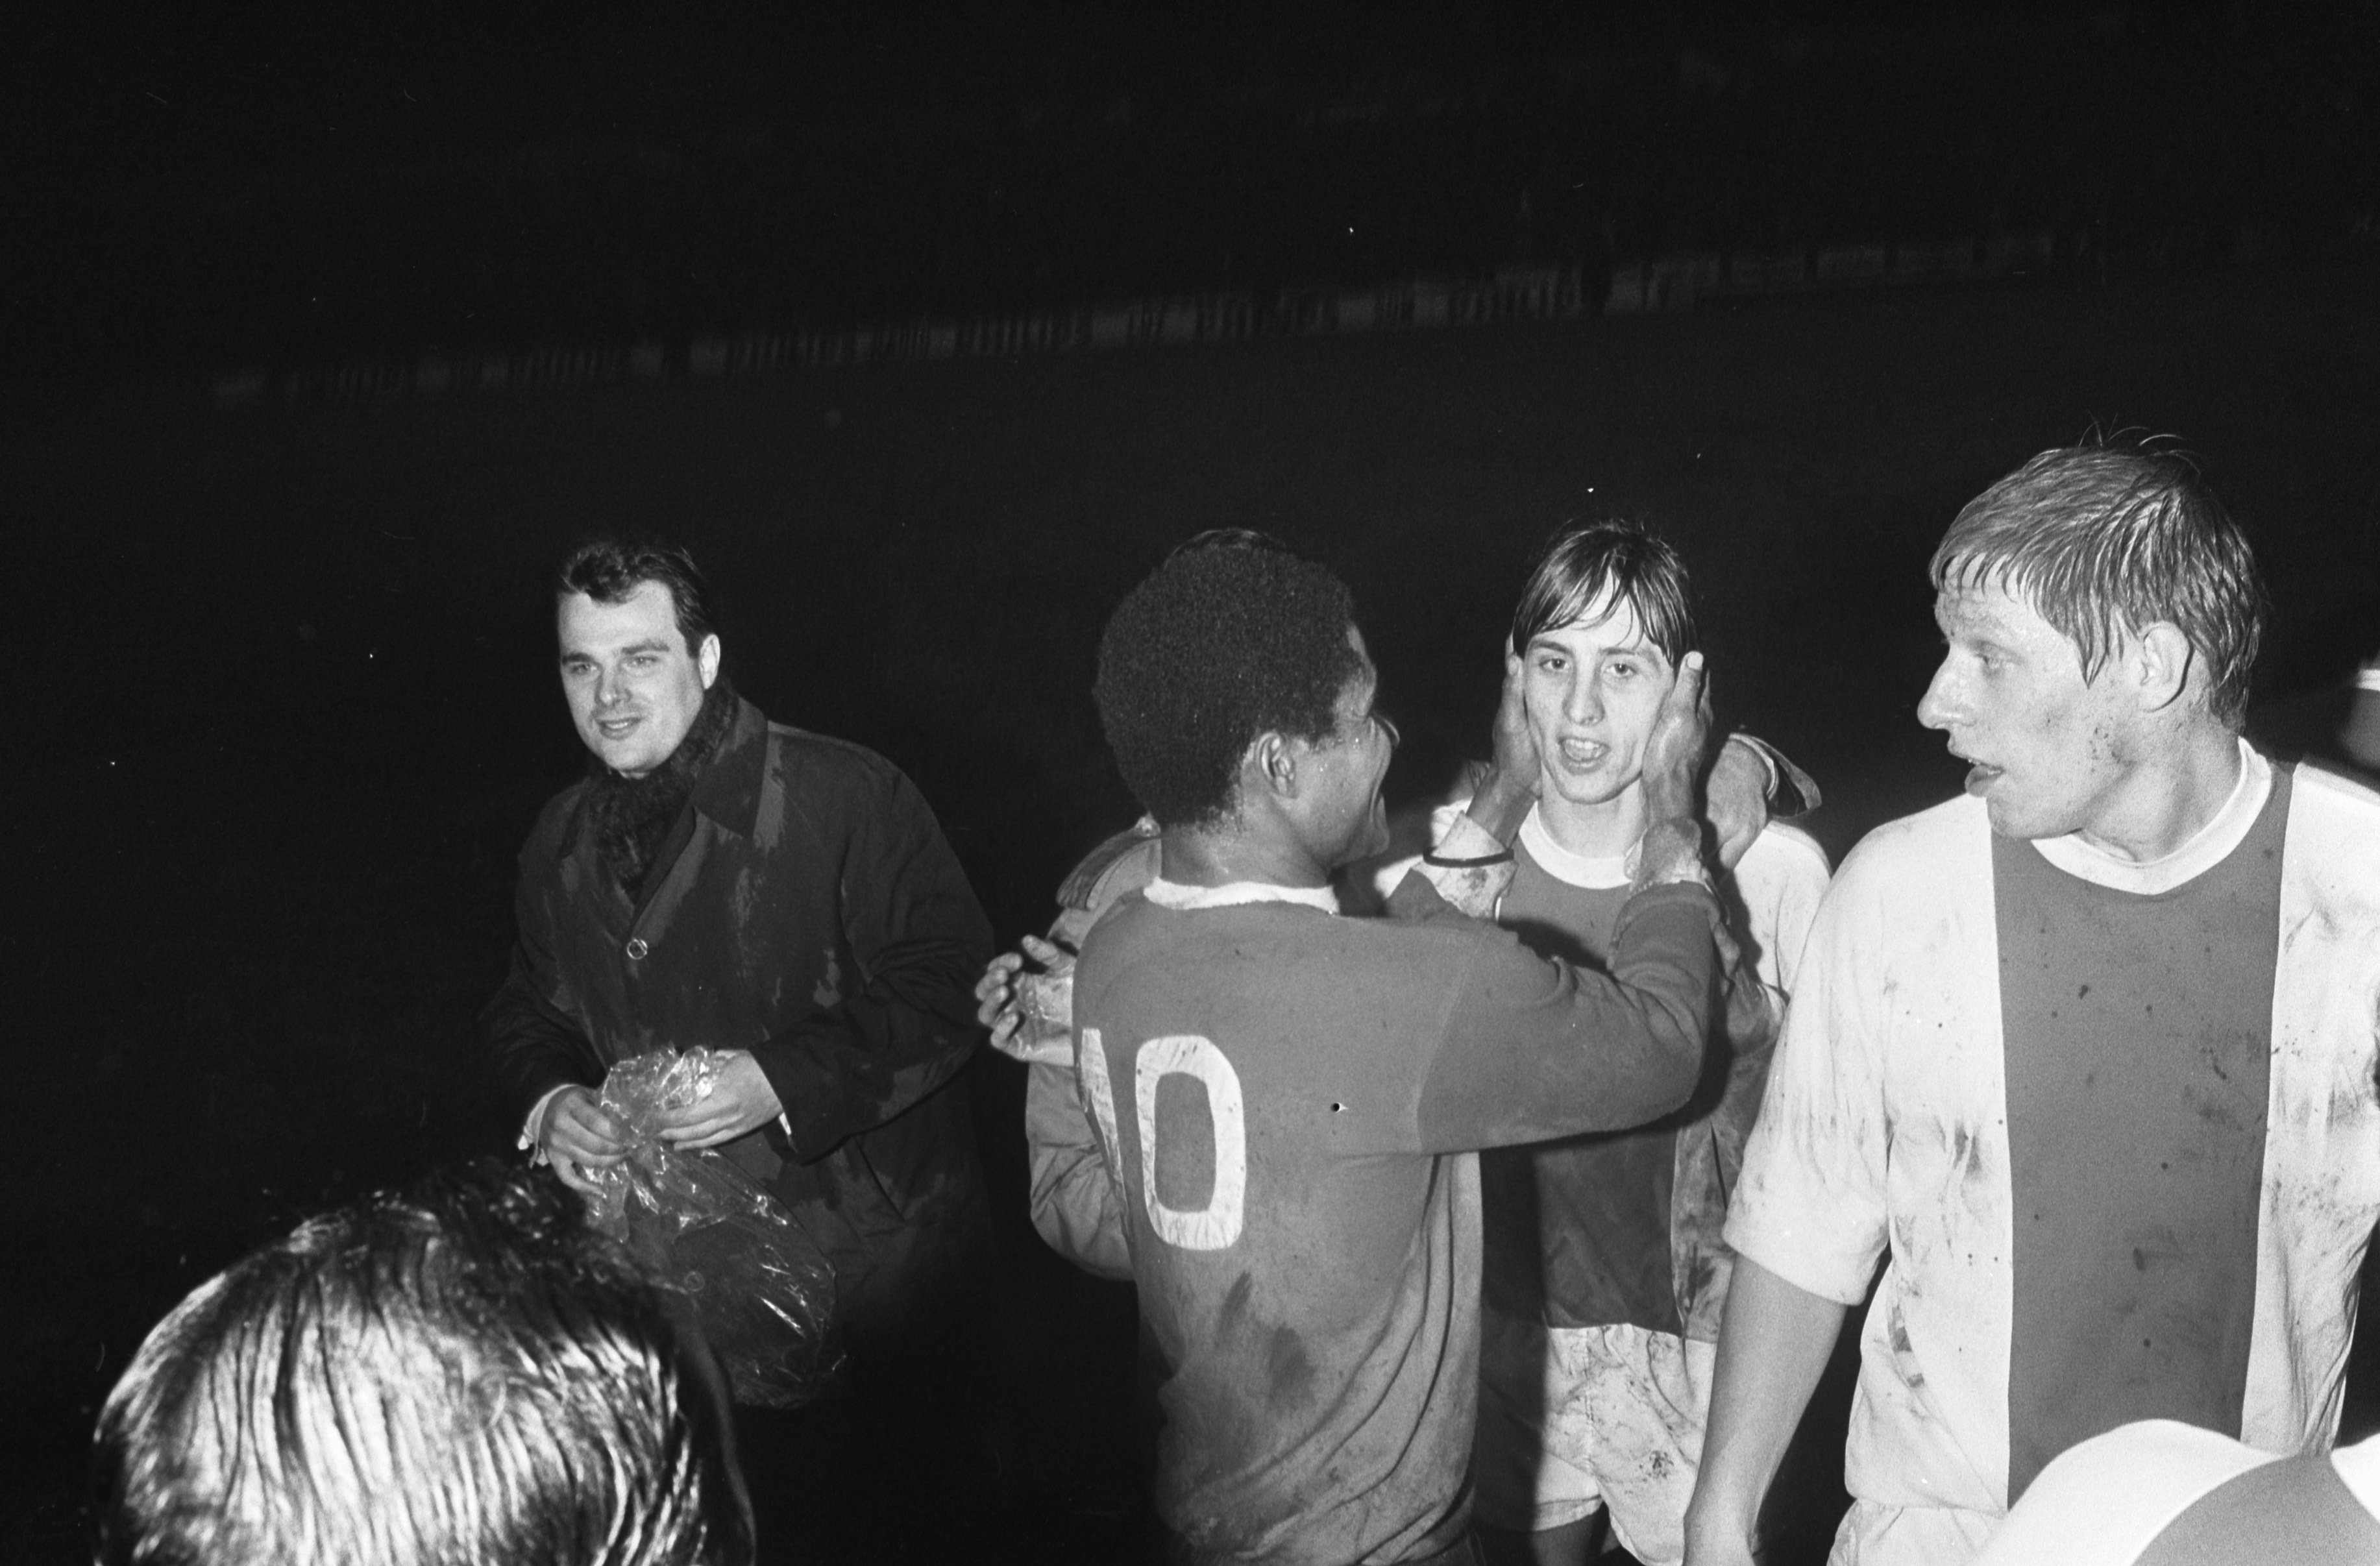 Storia del calcio portoghese. Eusébio si congratula con Johan Cruijff dopo un match tra Benfica e Ajax del 1969